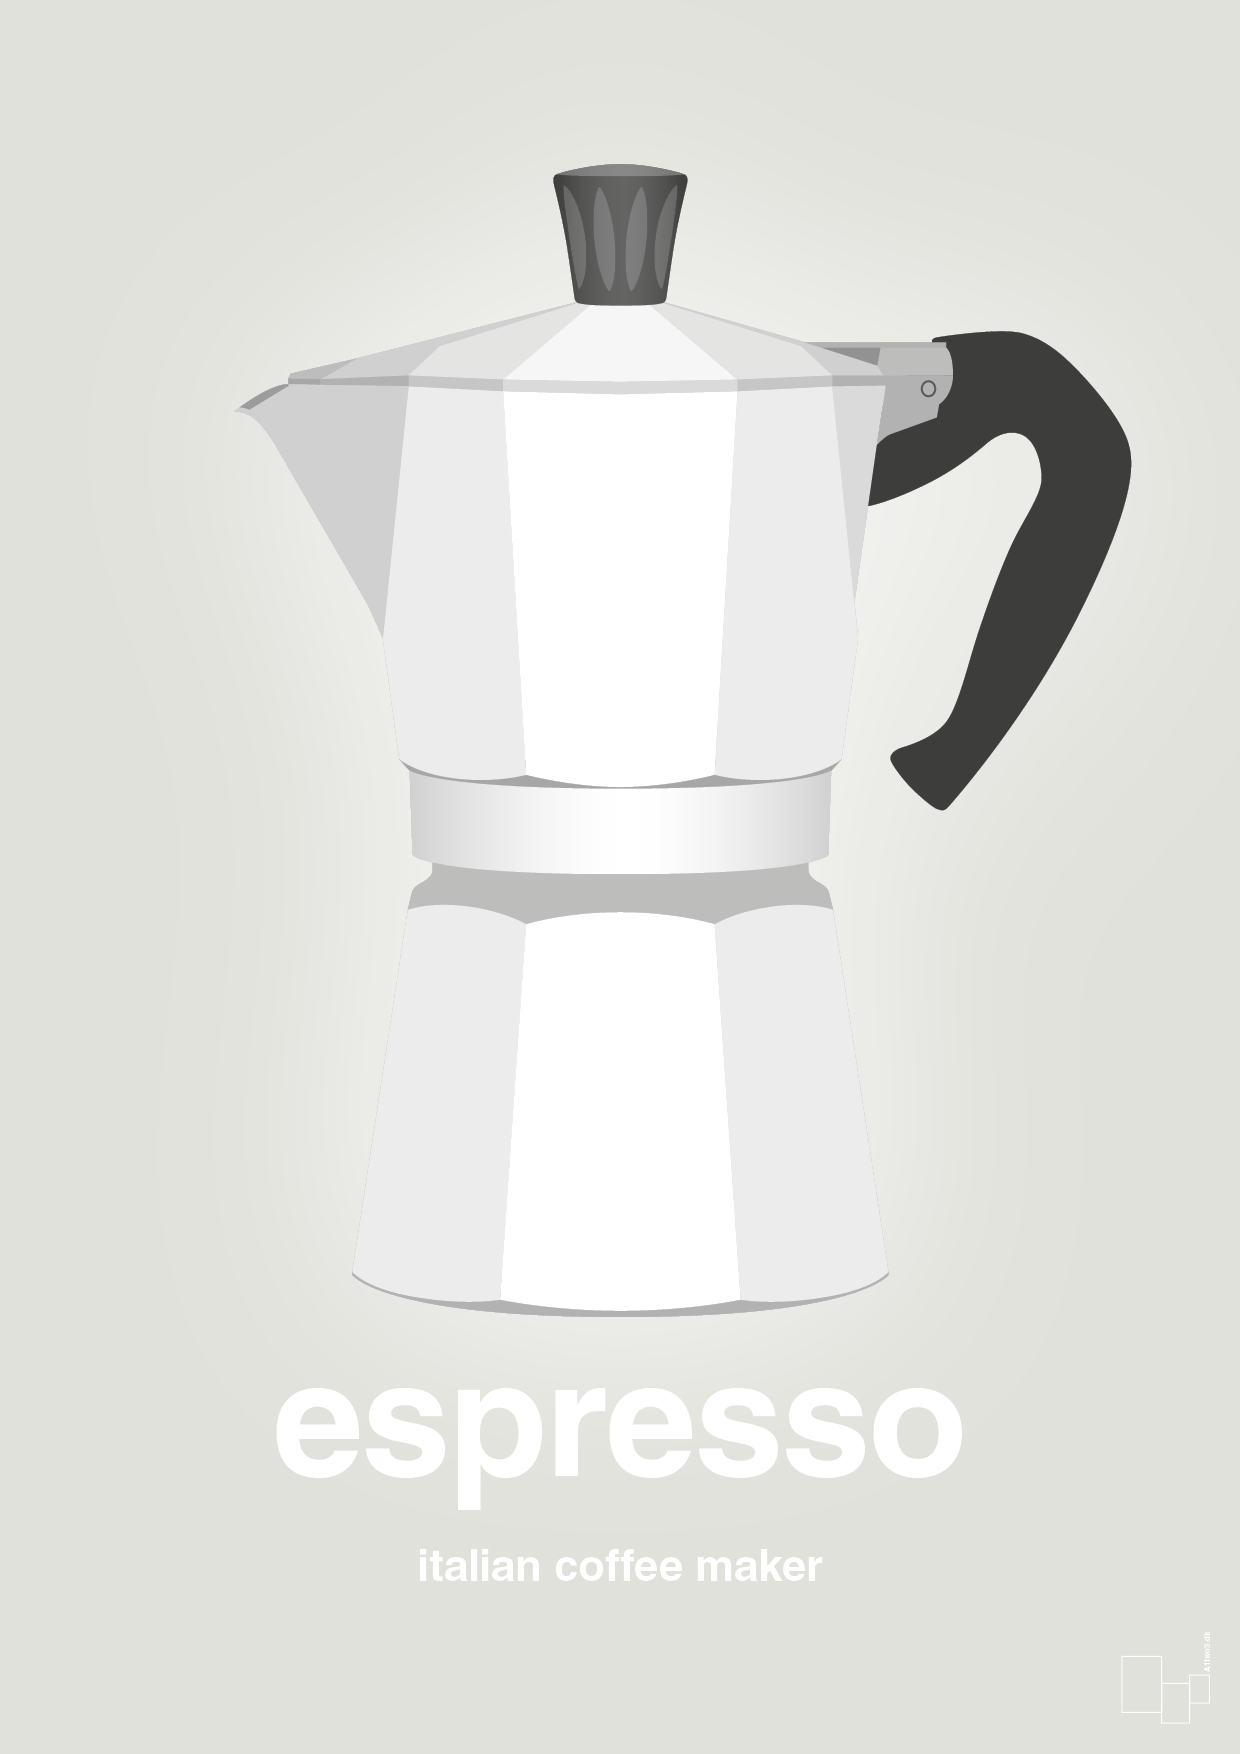 espresso - italian coffee maker - Plakat med Mad & Drikke i Painters White